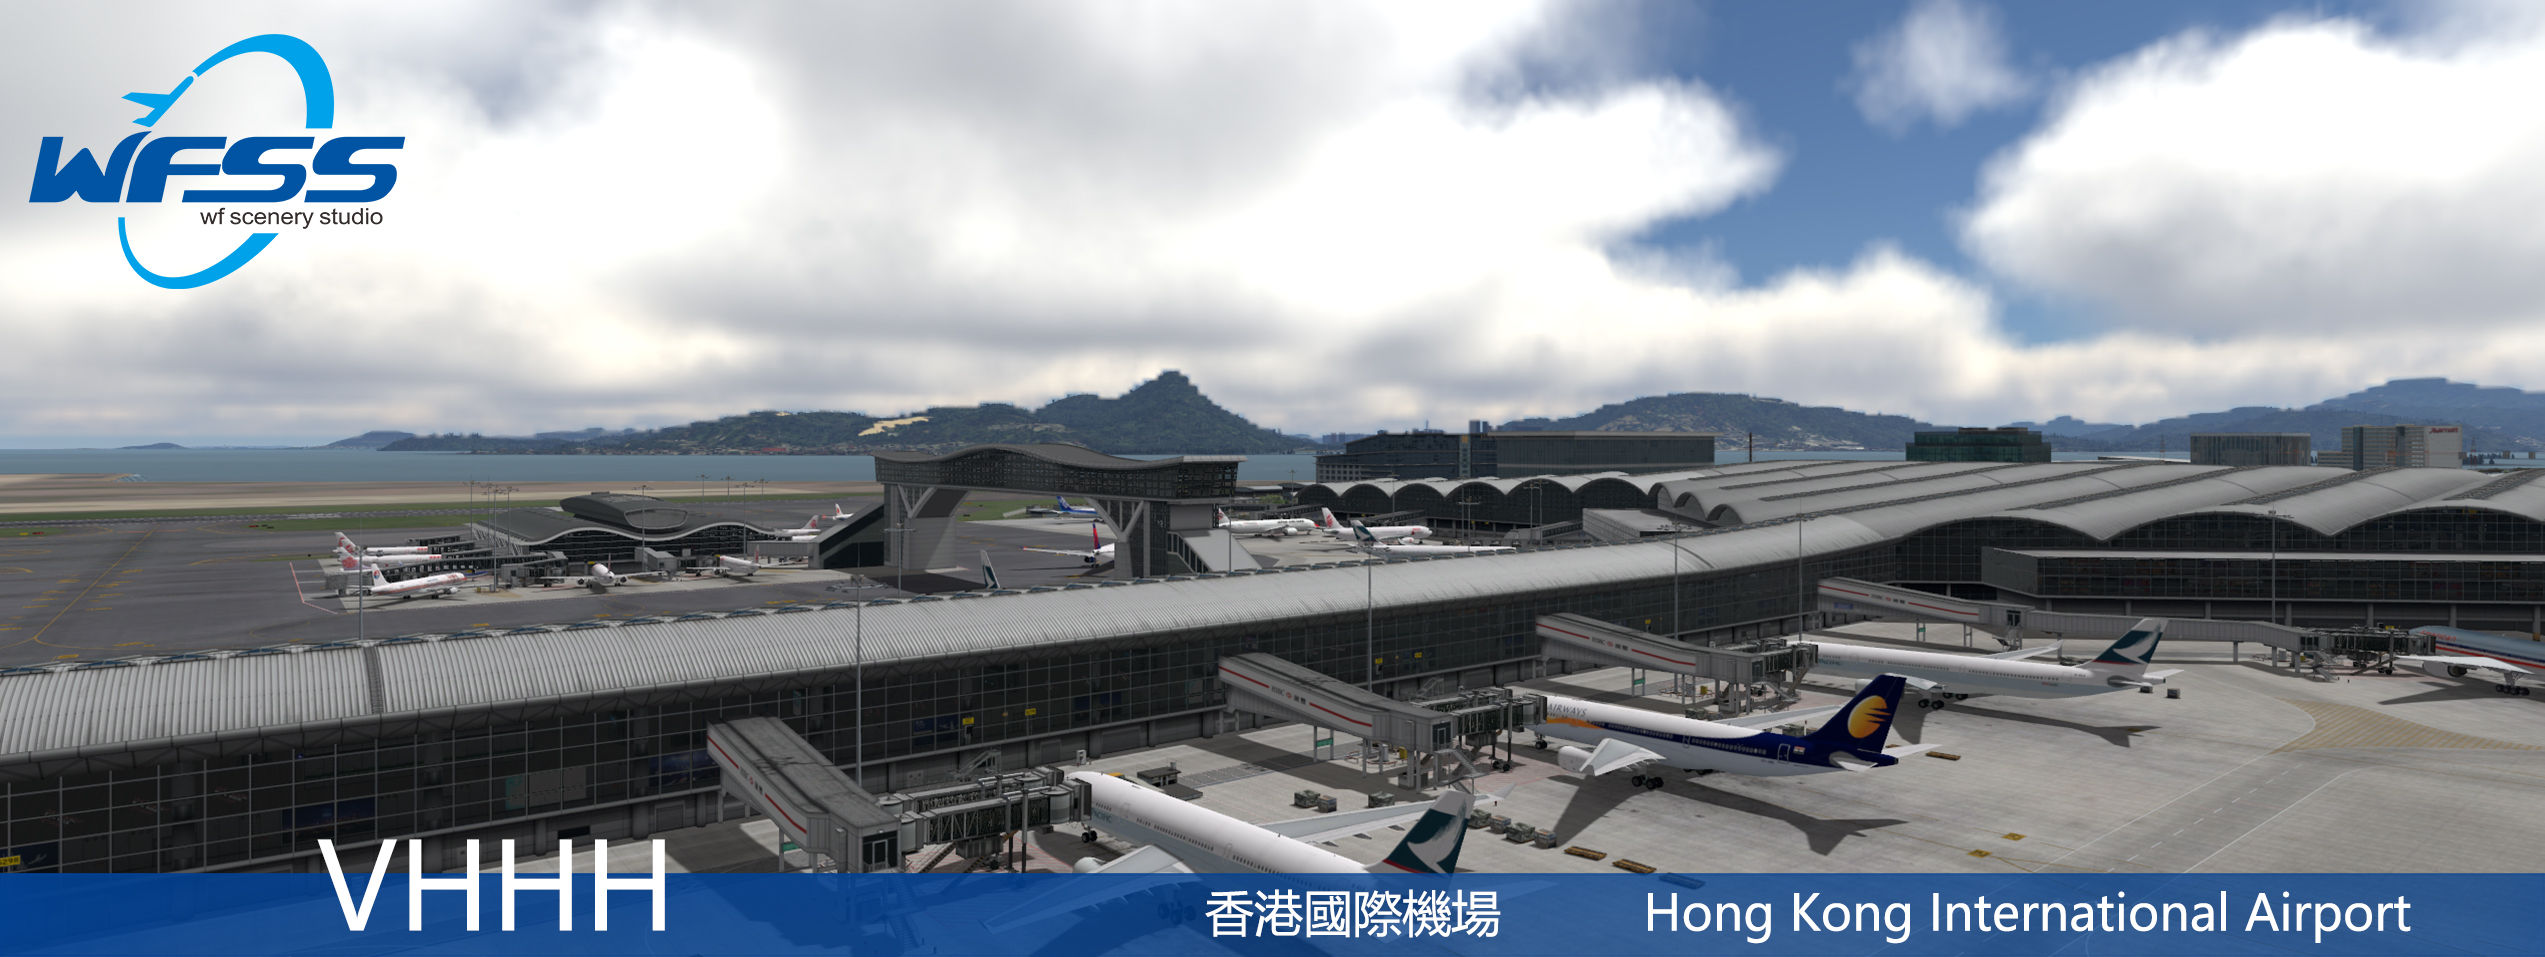 WFSS-香港国际机场发布-2784 